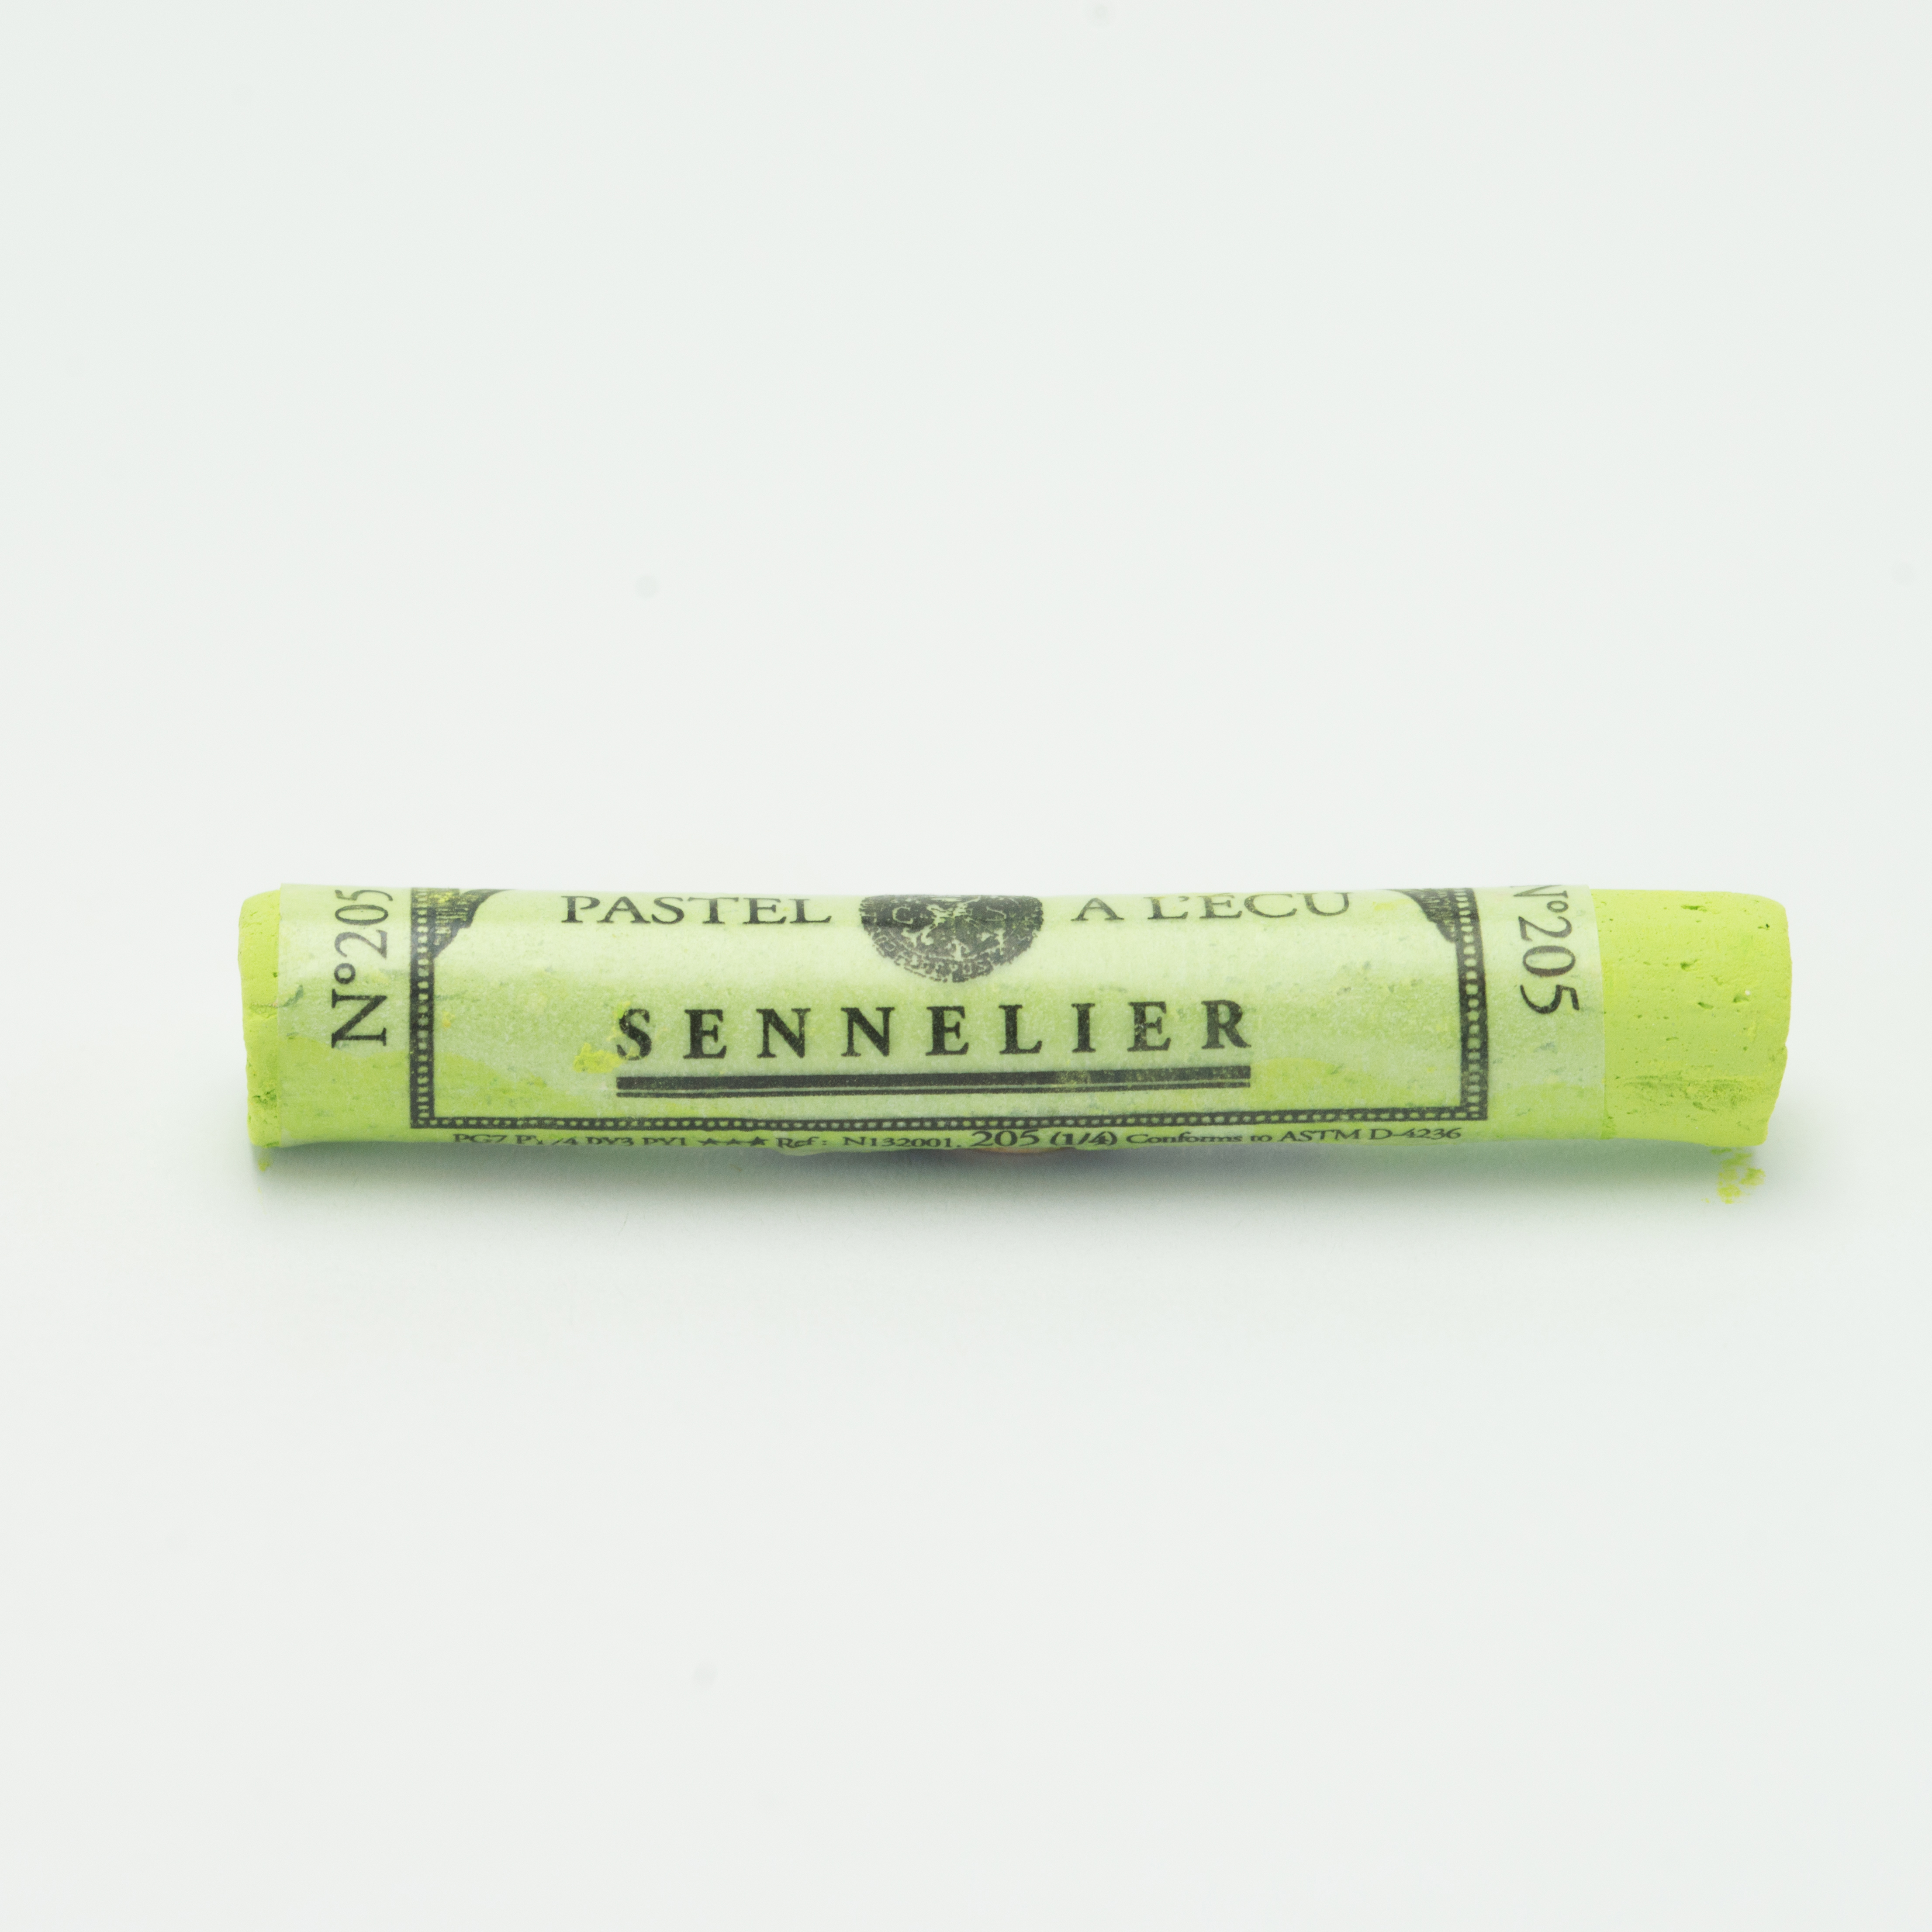 Sennelier Extra Soft Pastels - Apple Green 205